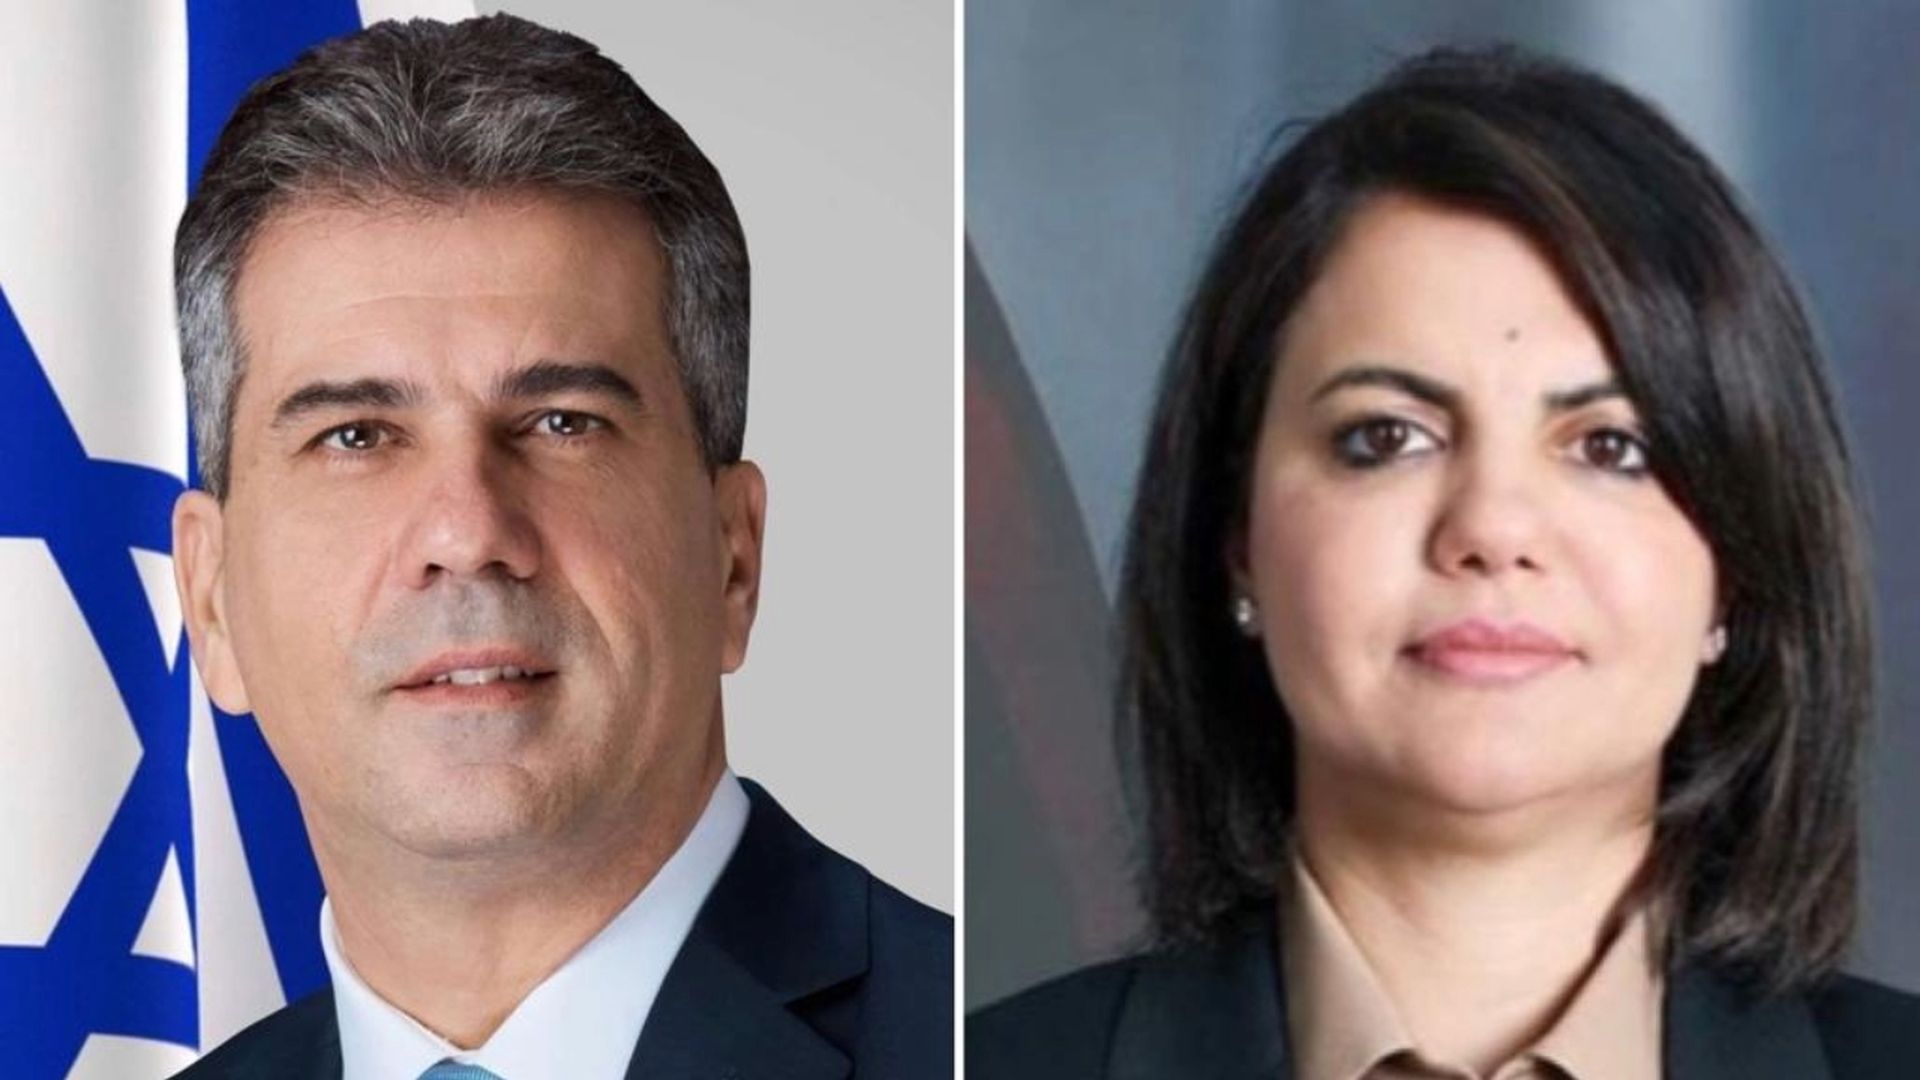 Photos of Israeli Foreign Minister Eli Cohen and Libyan Foreign Minister Najla al-Mangoush